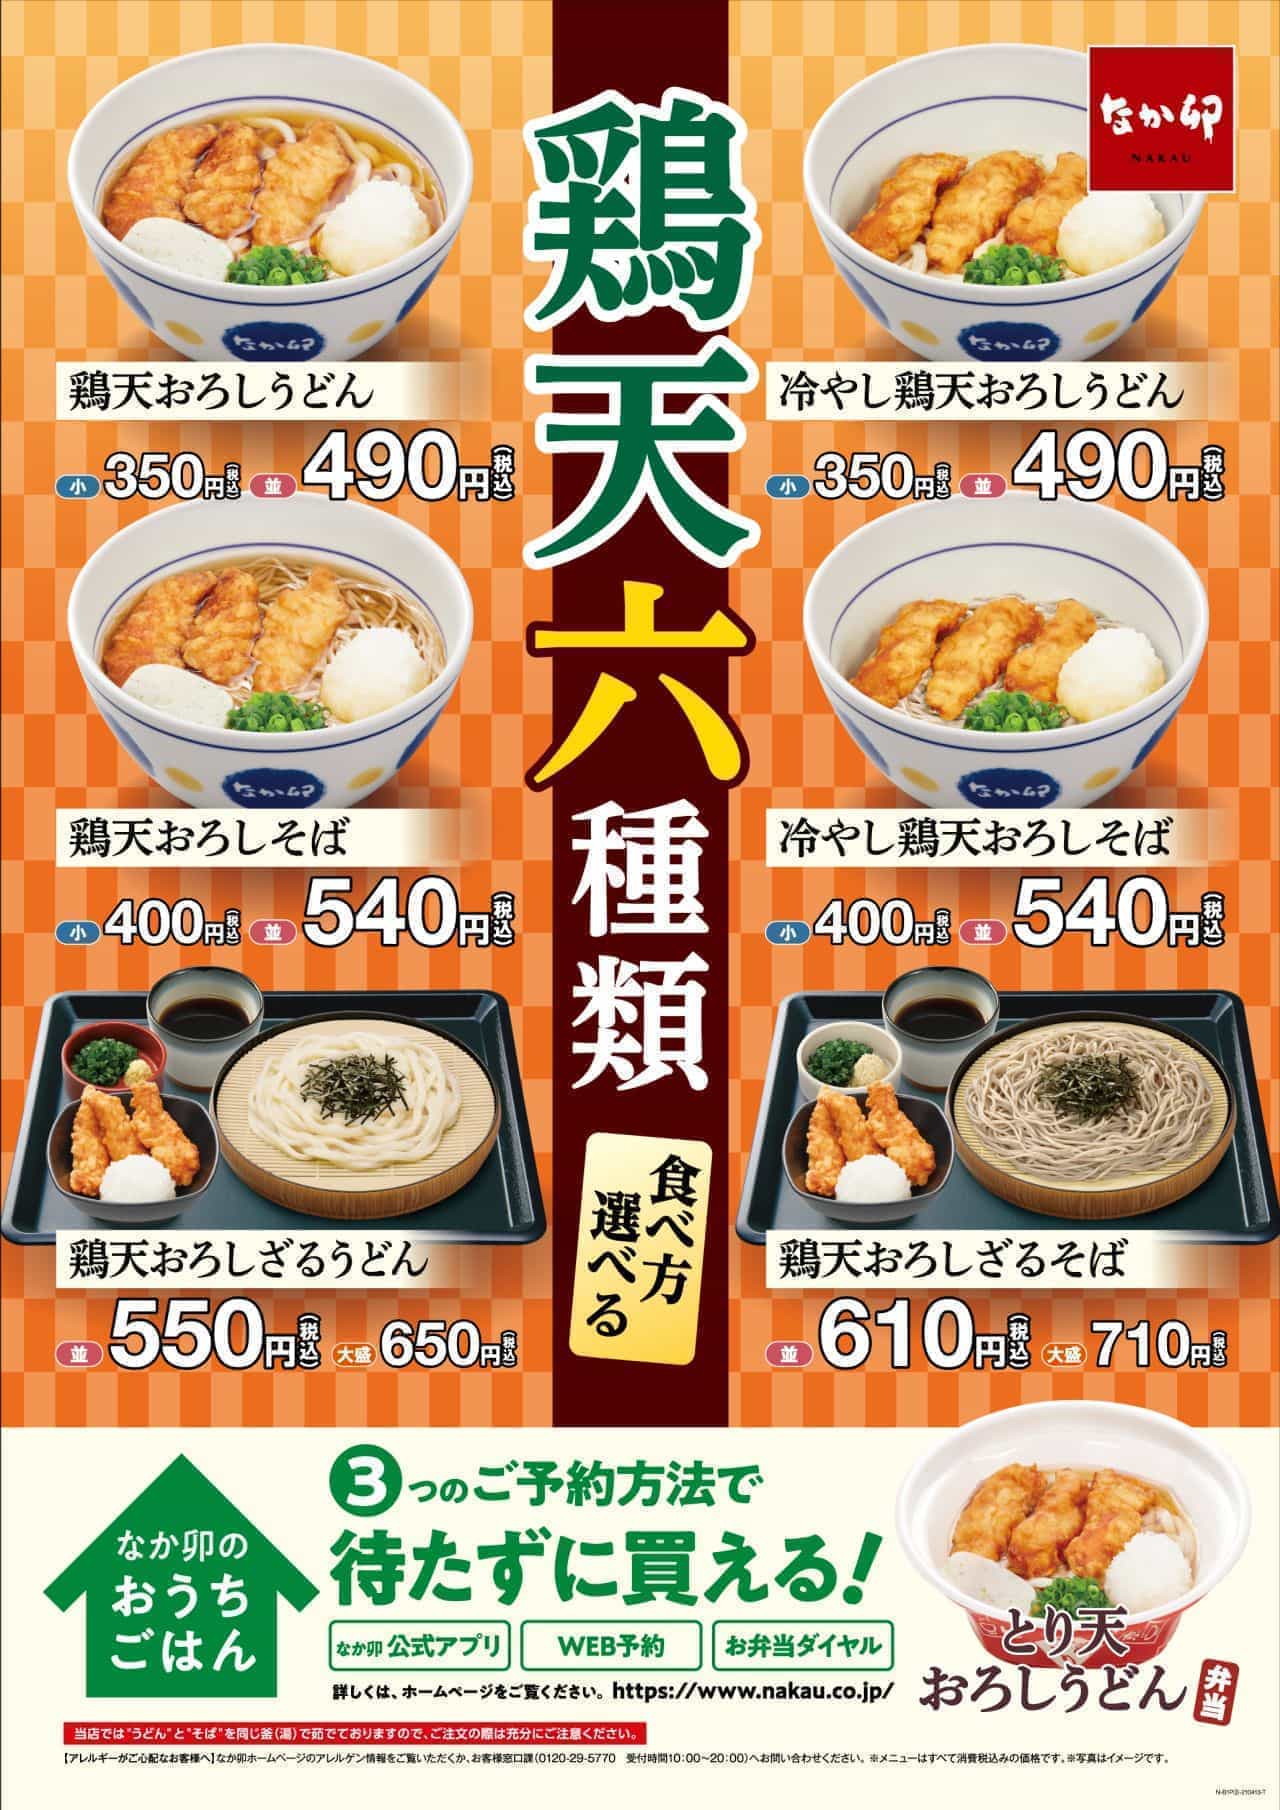 Nakau "Chicken tempura udon with grated radish" etc.